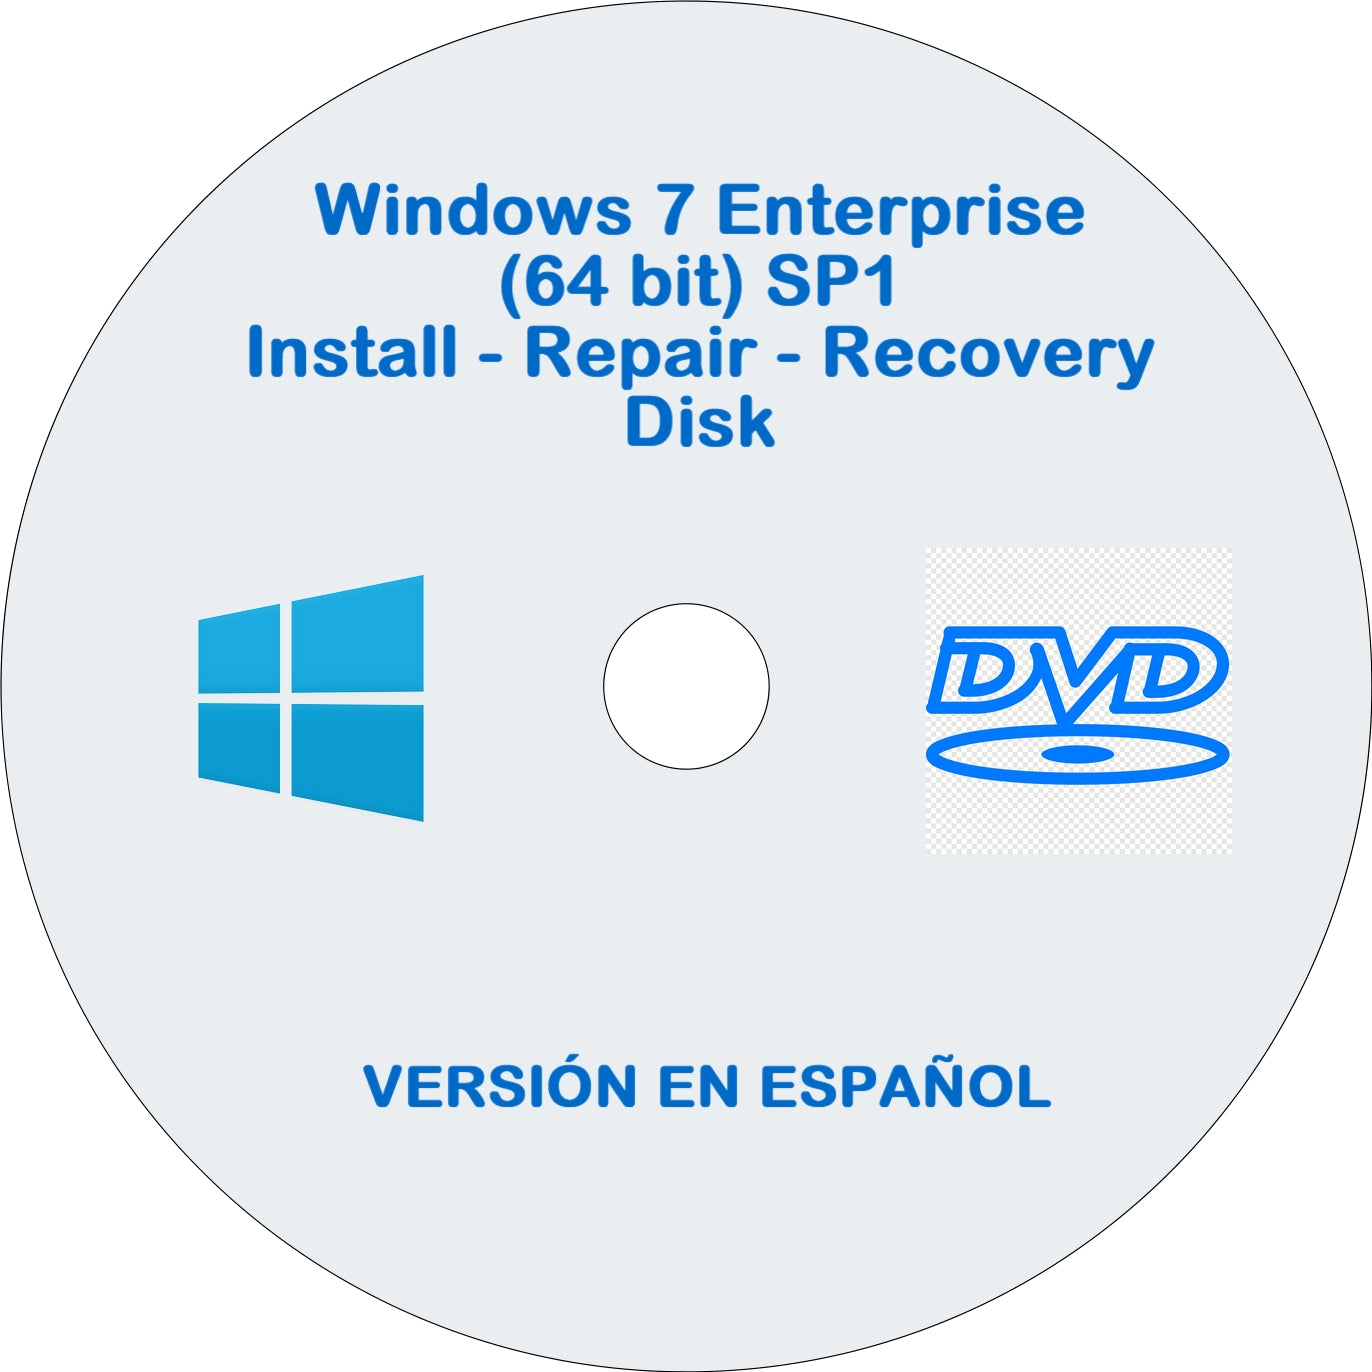 Windows 7 Enterprise Disk 64 Bit